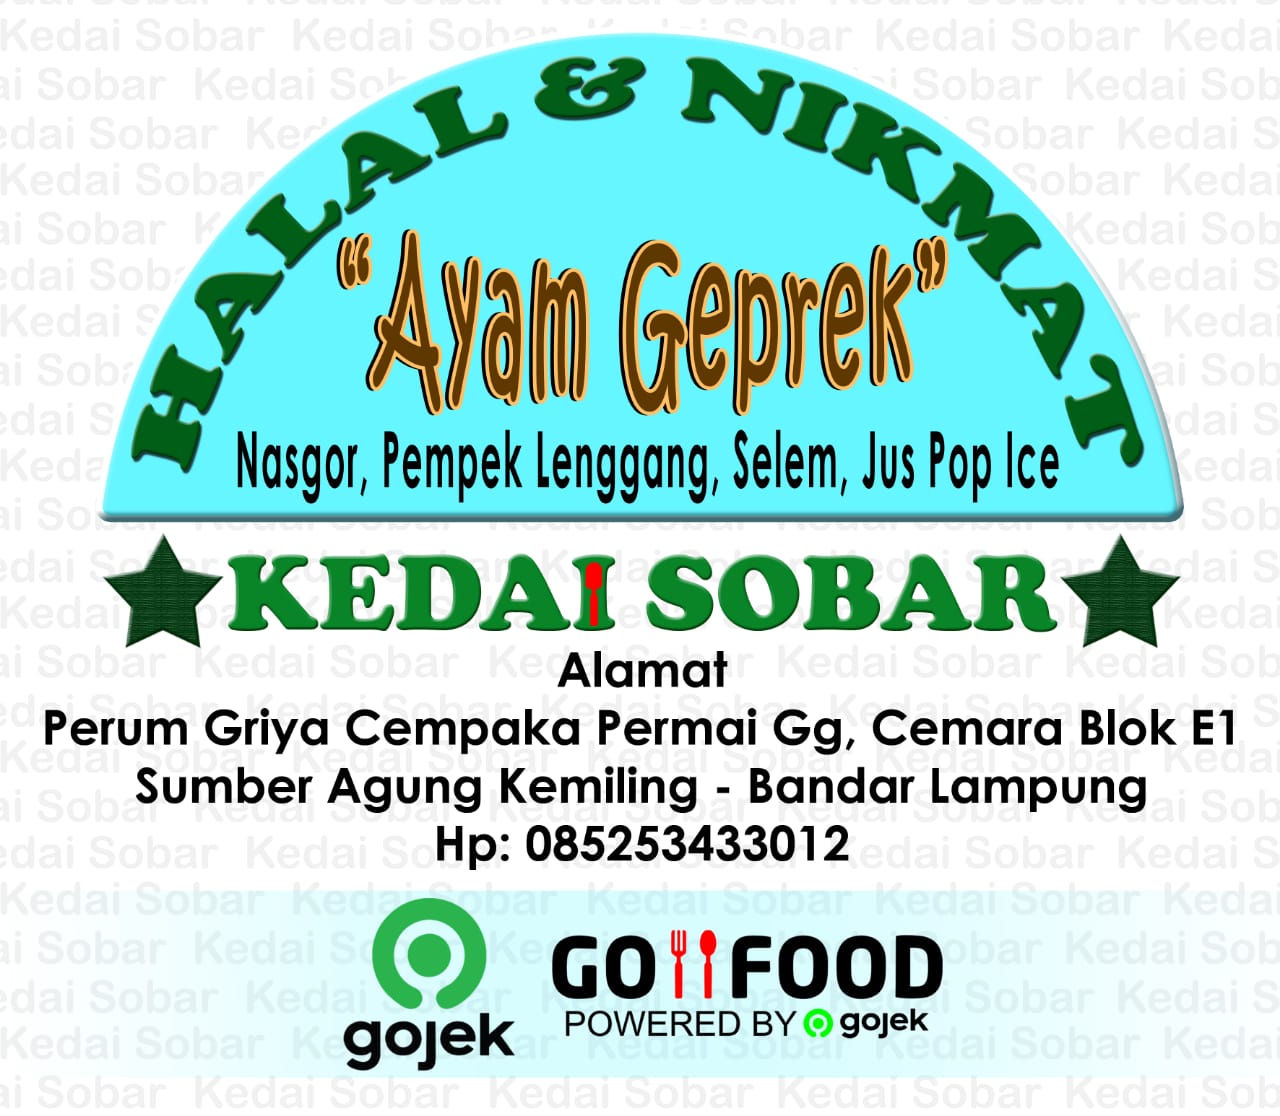 Ayam GULING UTUH @AyamGulingBoorju Kuliner Lampung | FREE ONGKIR Delivery Bandar Lampung Promo Diskon PPKM Ayam Guling Boorju UTUH